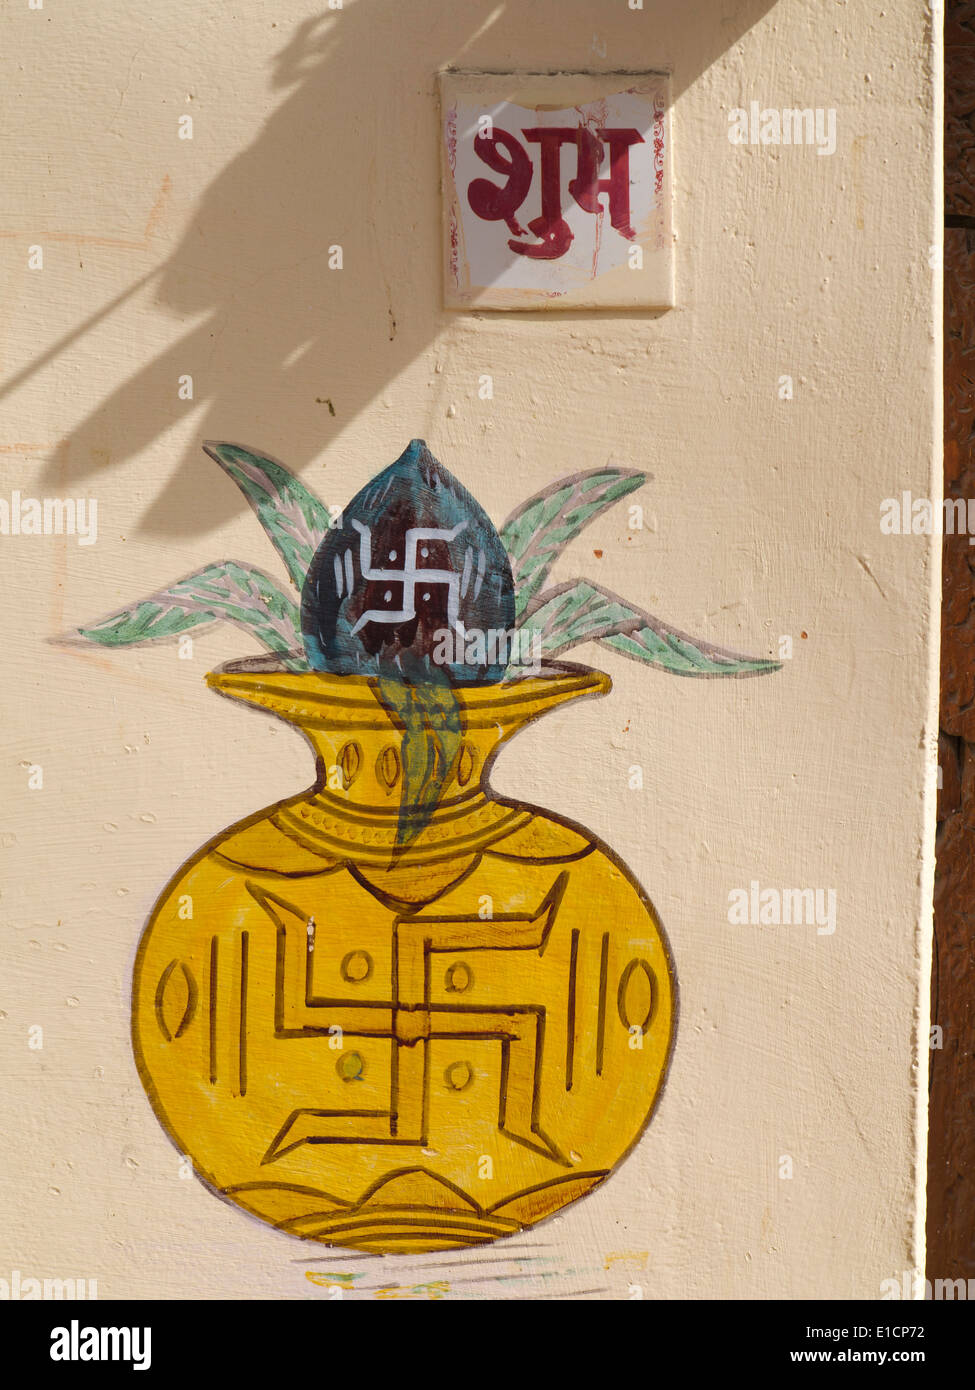 India, Rajasthan, Jaisalmer, swastika Hindu good luck symbol painted on house wall at doorway Stock Photo